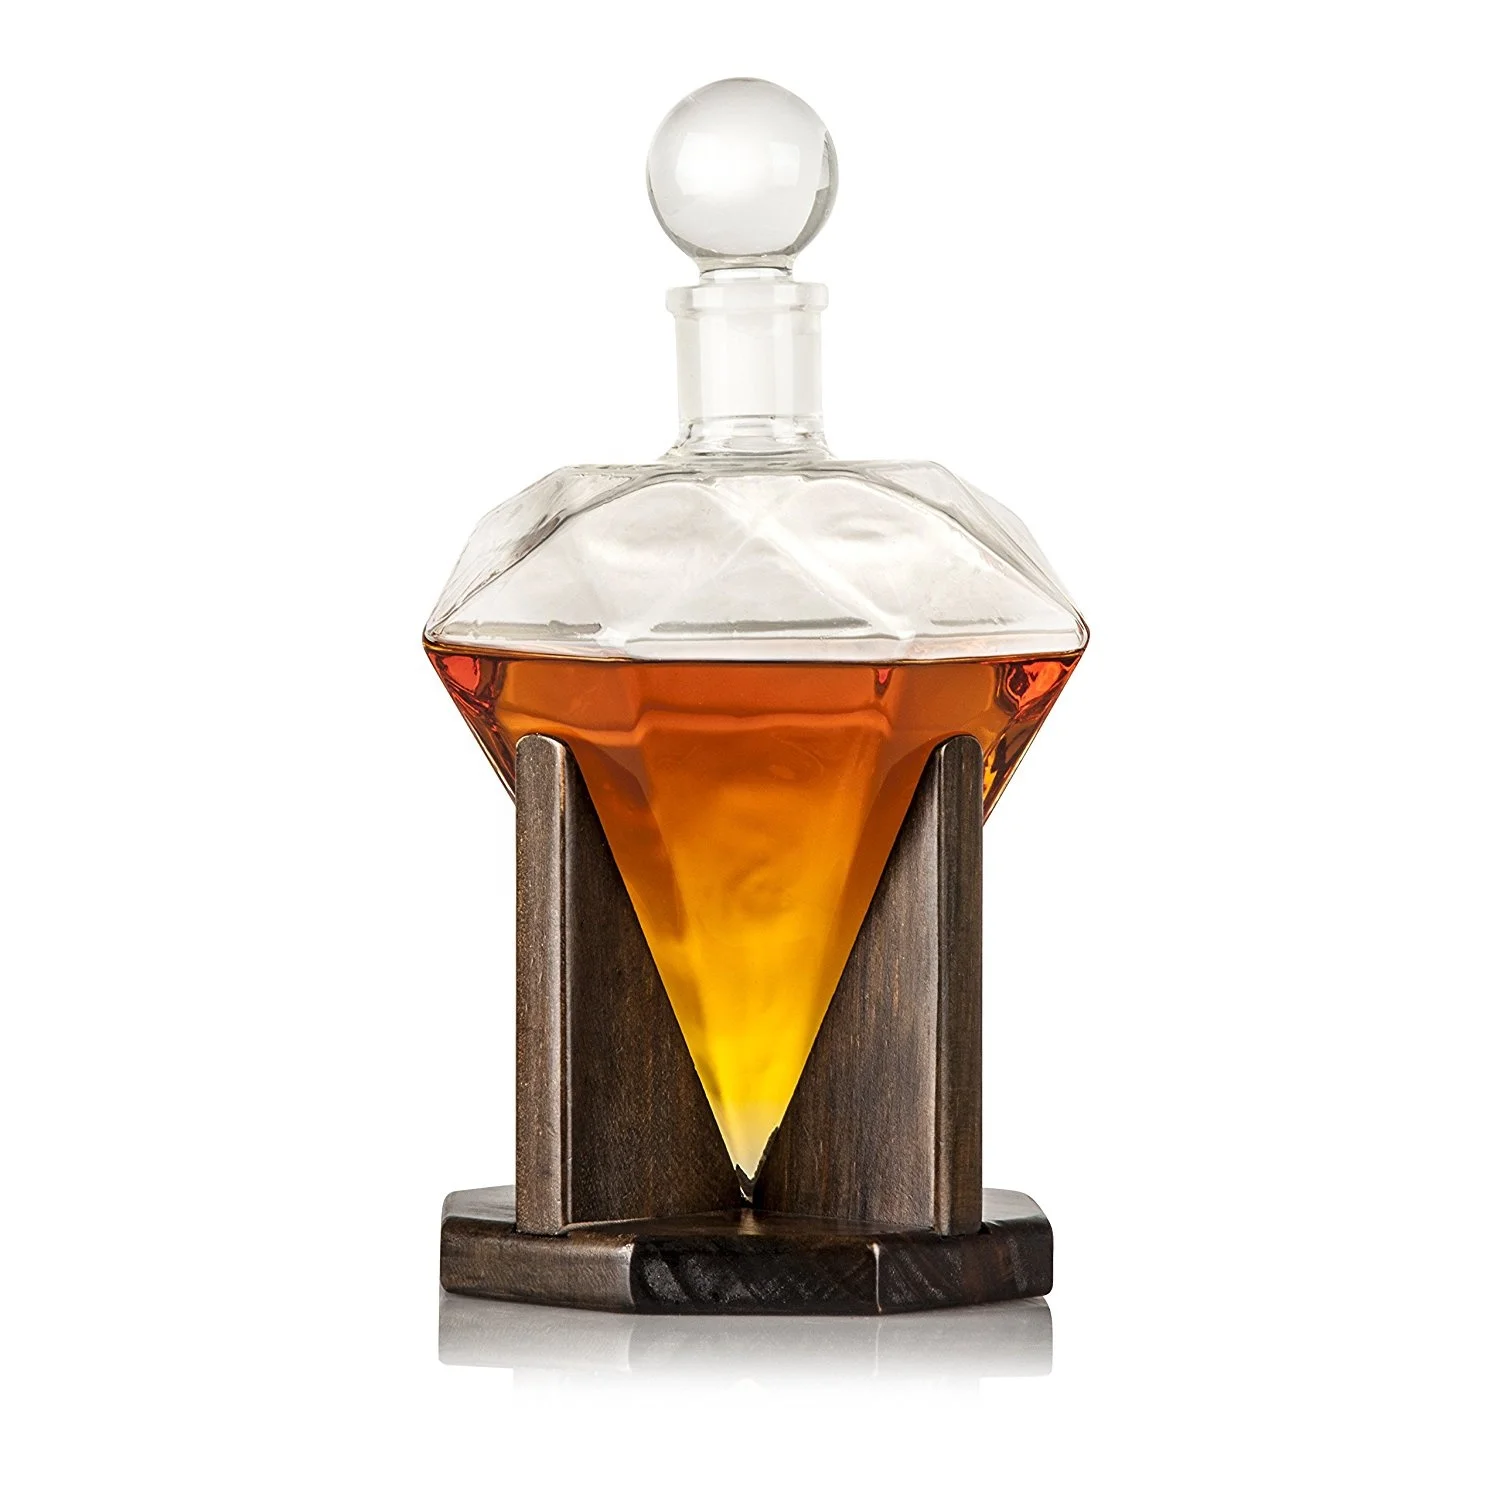 

1000ml Unique Design Glass Diamond Whisky Decanter Set Sets with Wooden Base